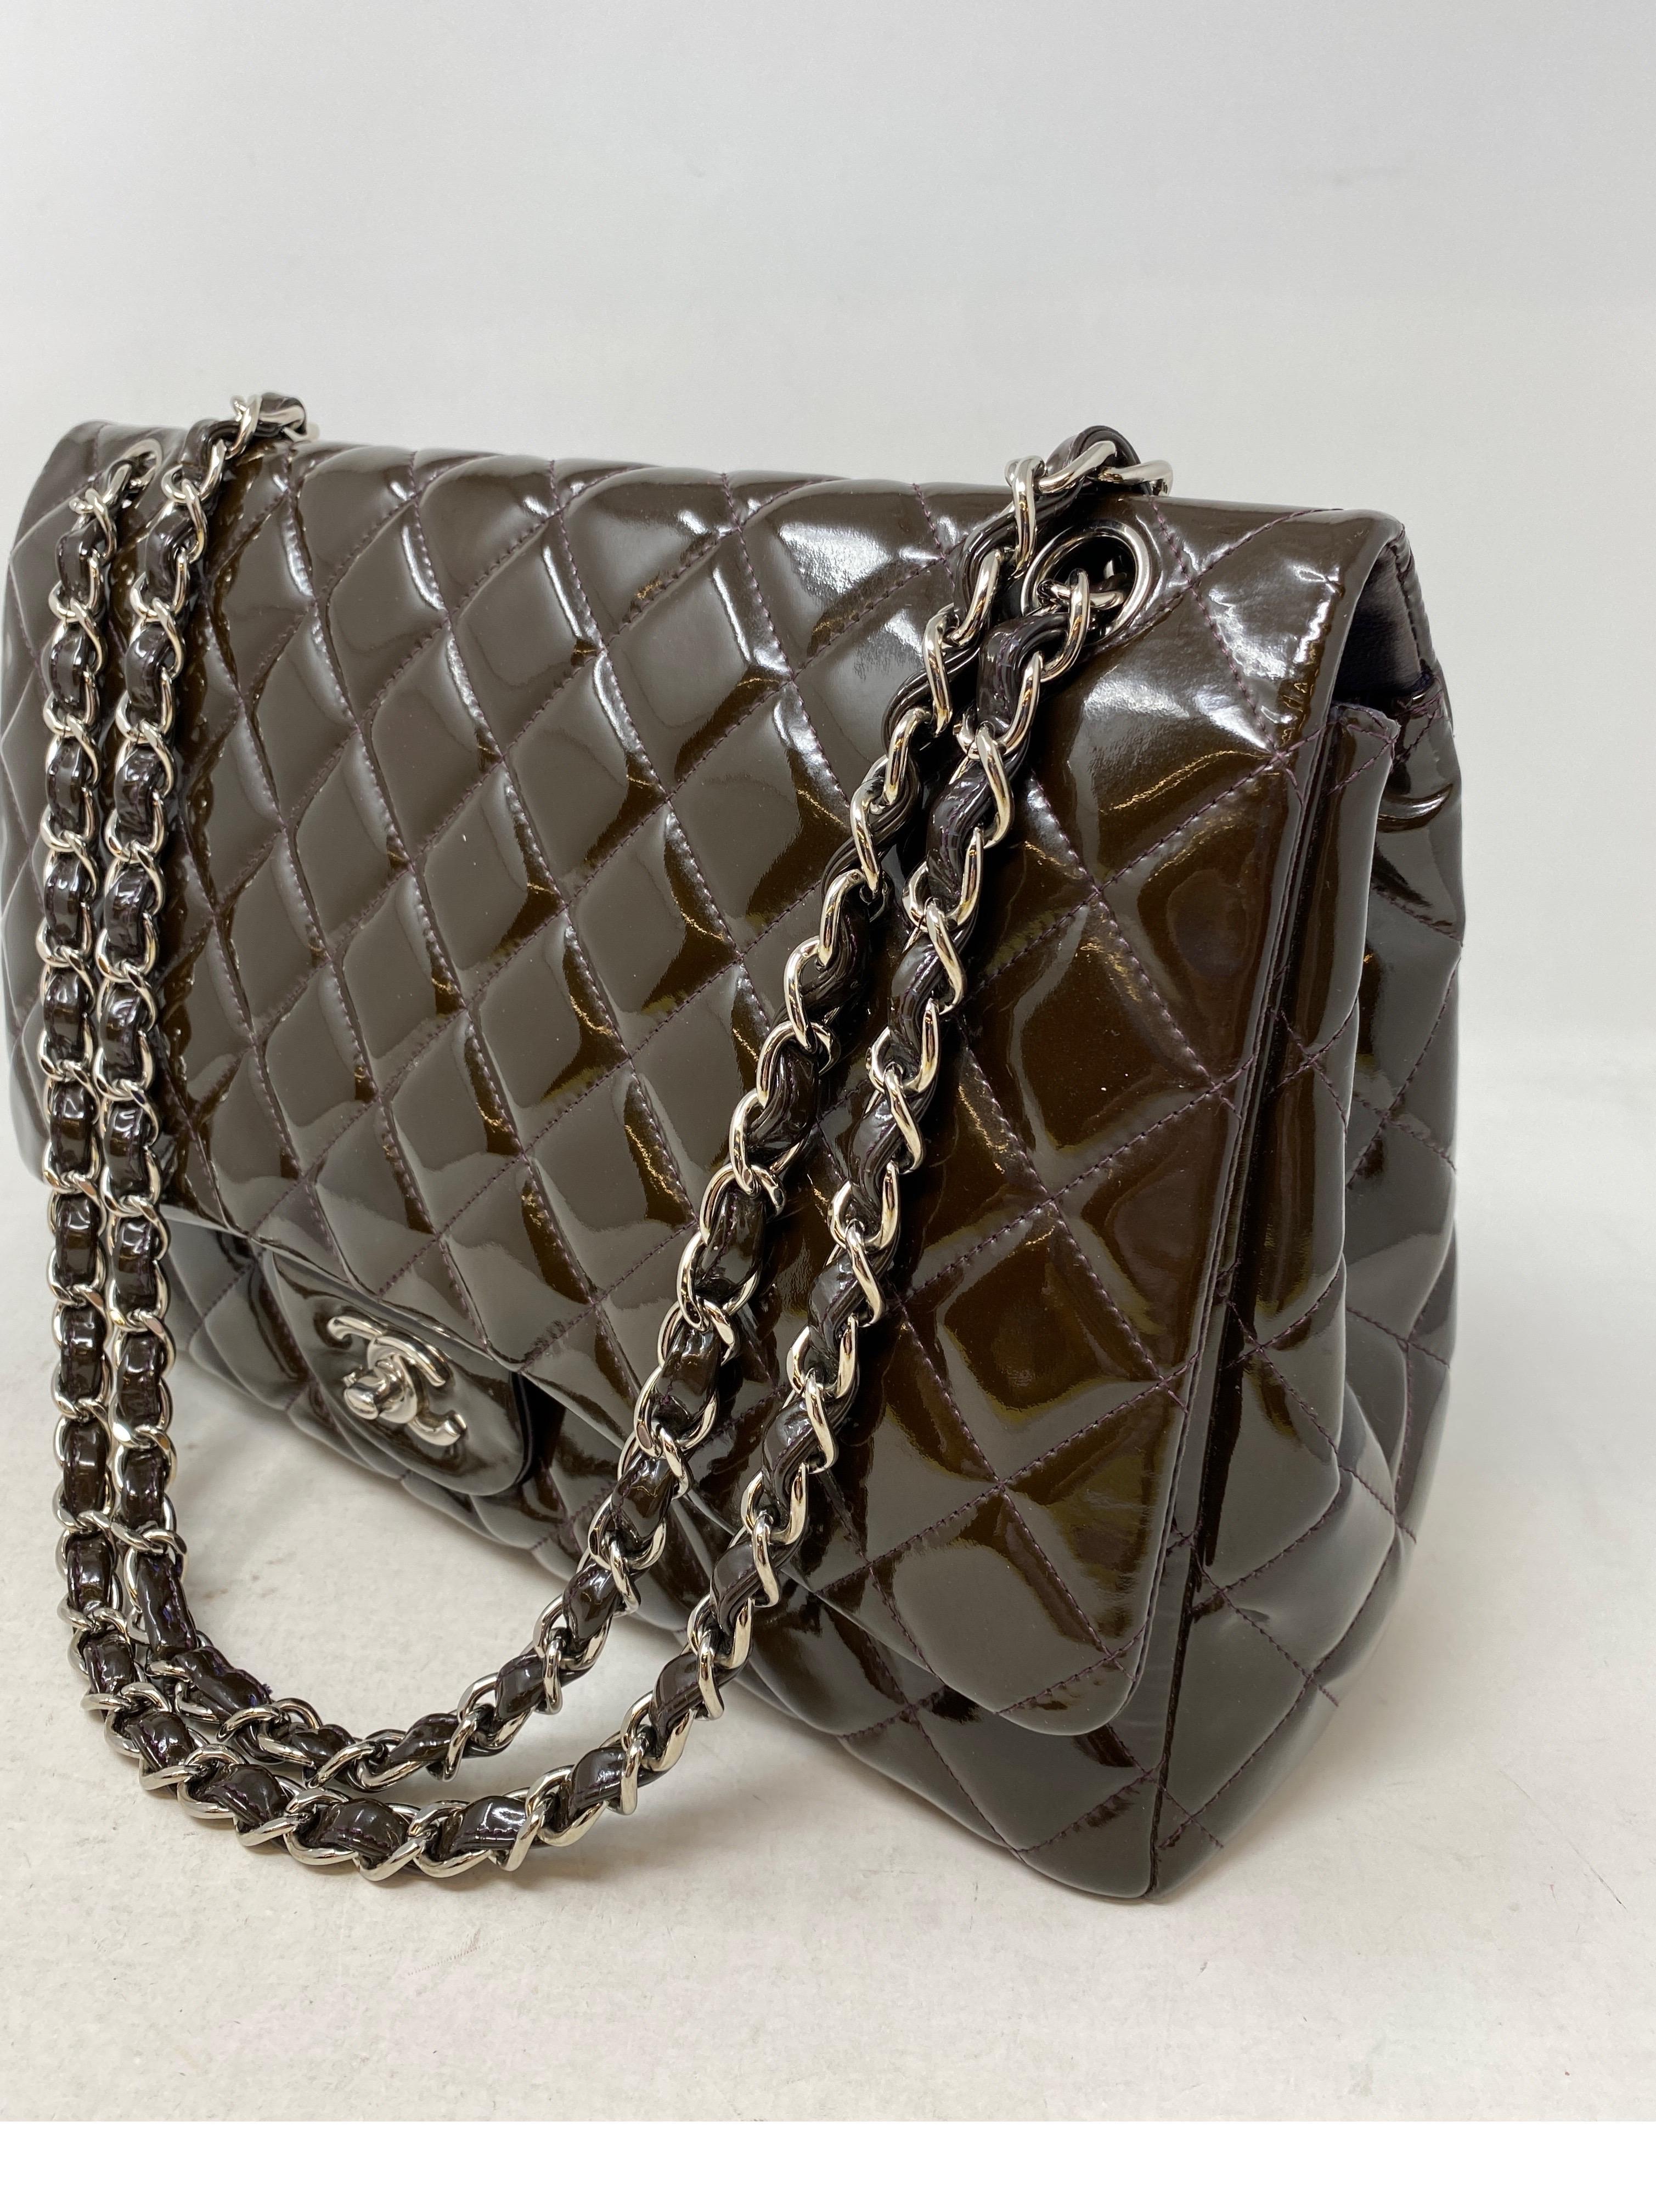 Chanel Jumbo Patent Leather Brown Bag  12